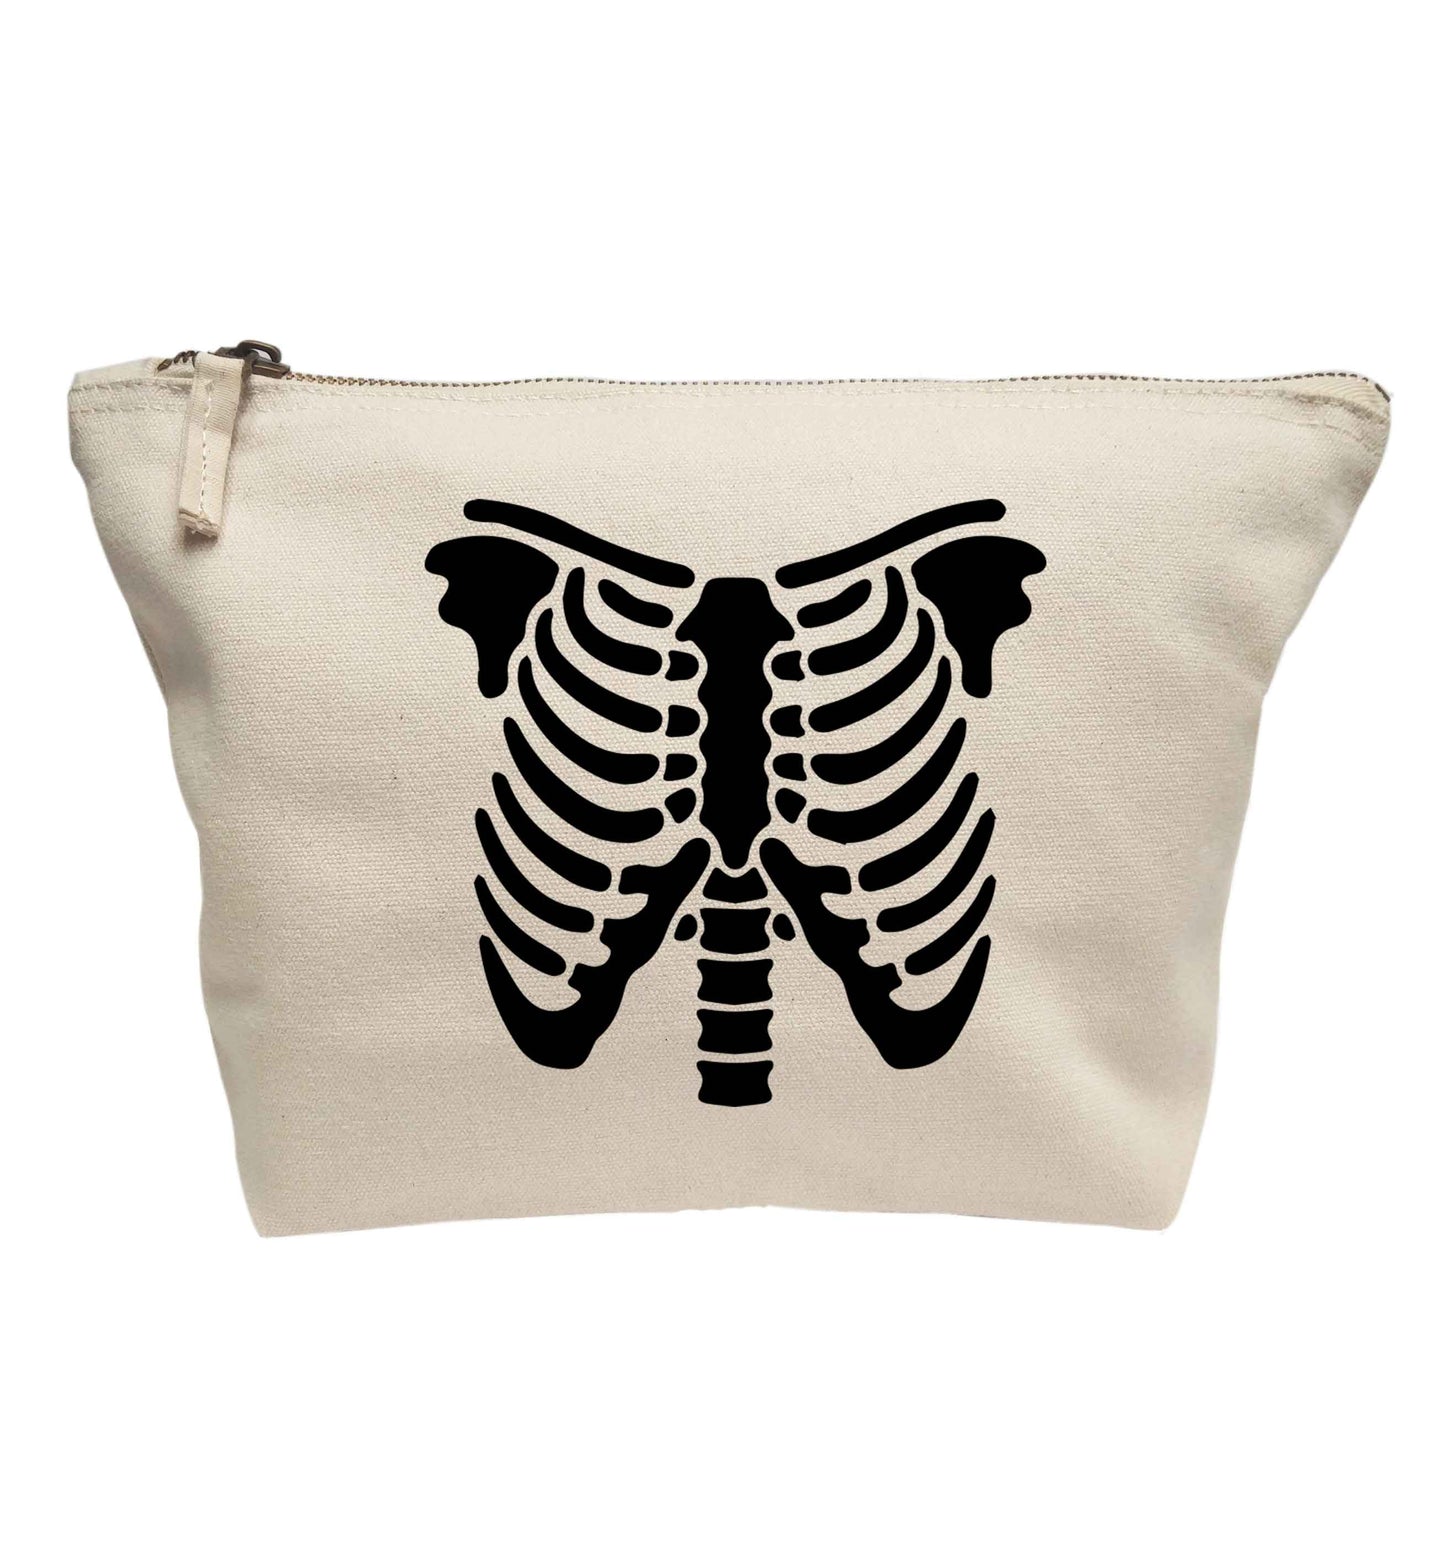 Skeleton ribcage | Makeup / wash bag